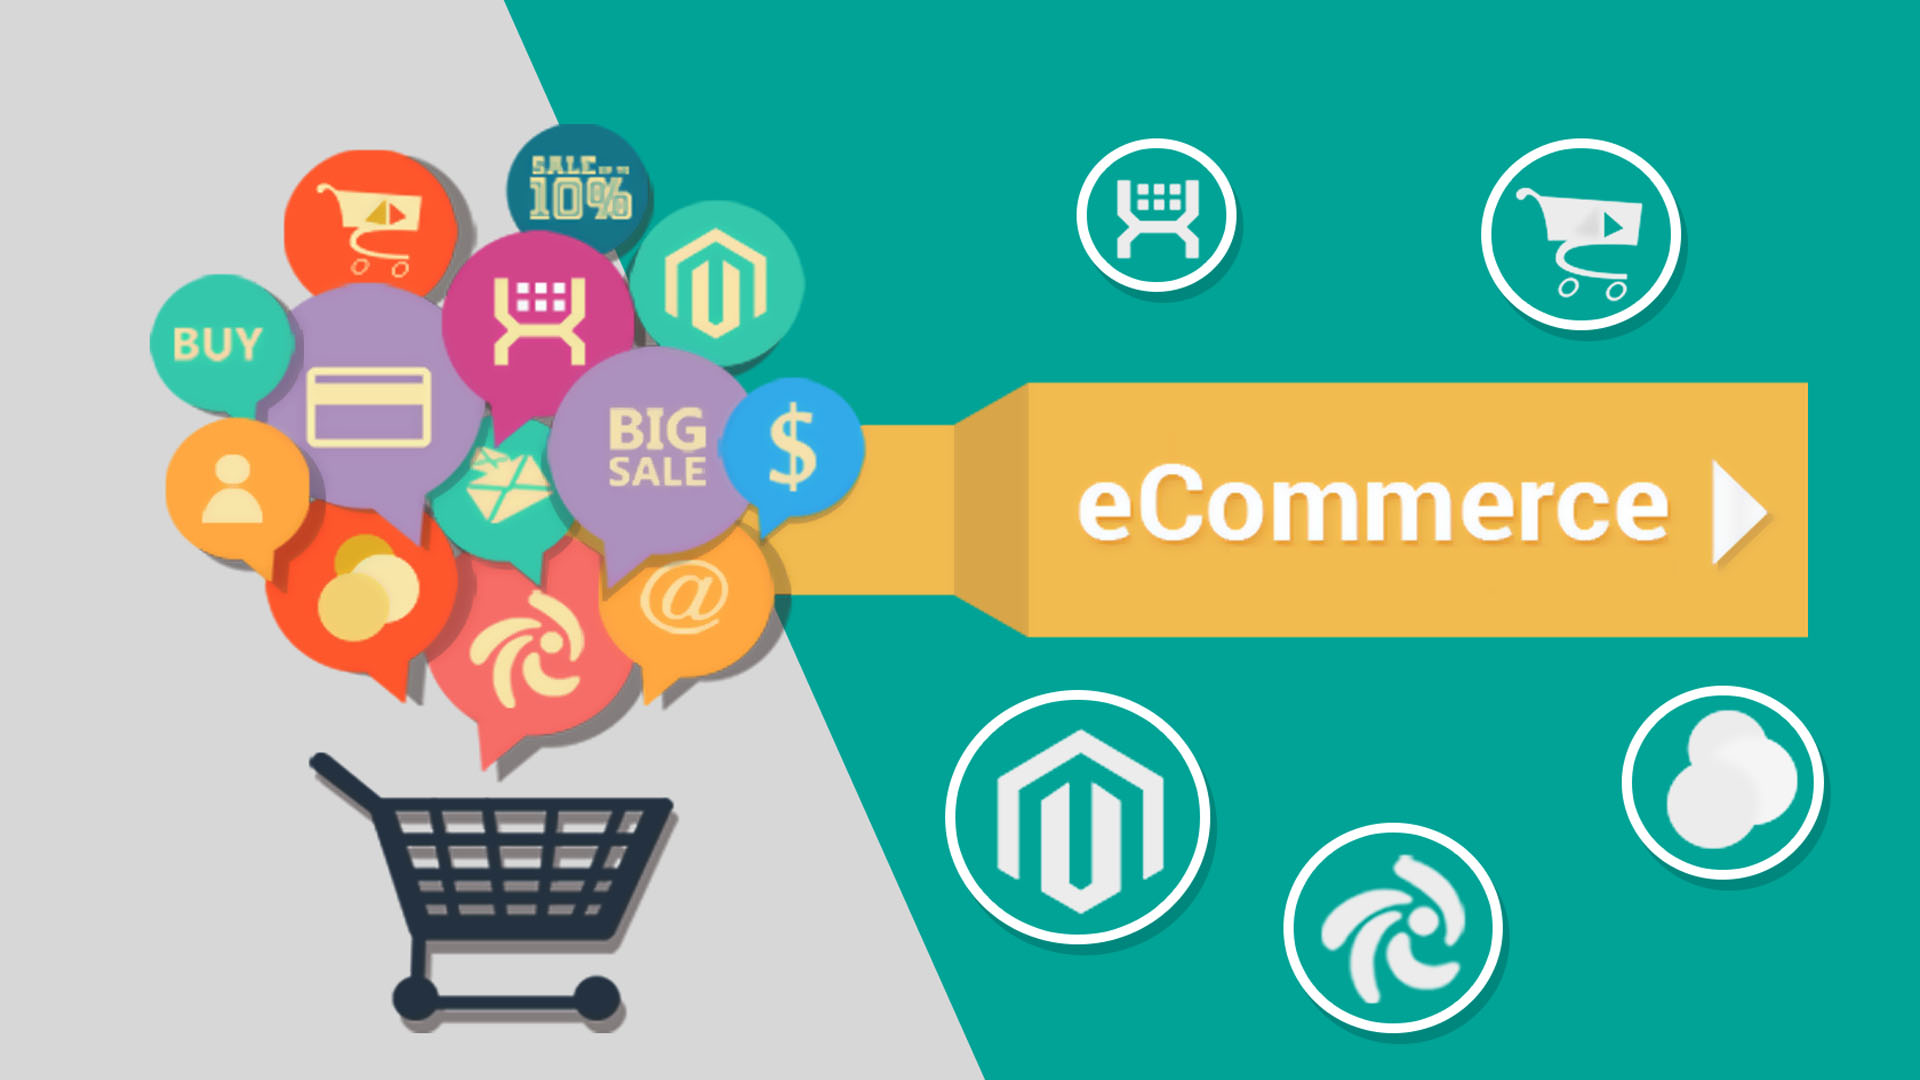 ecommerce-solution-image